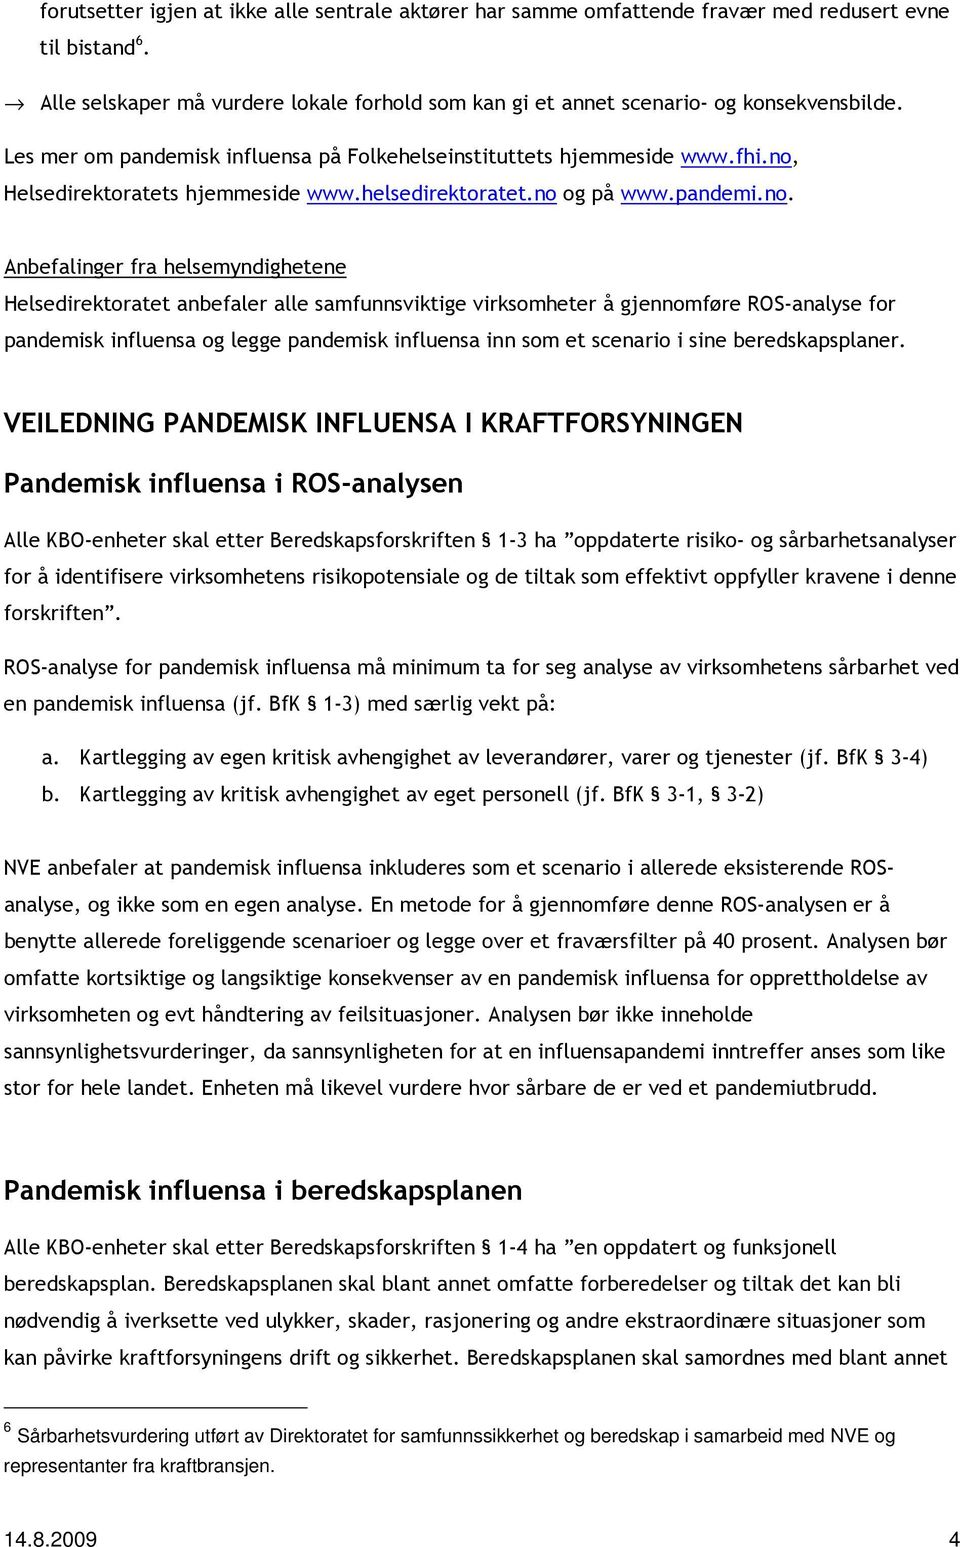 Helsedirektoratets hjemmeside www.helsedirektoratet.no 